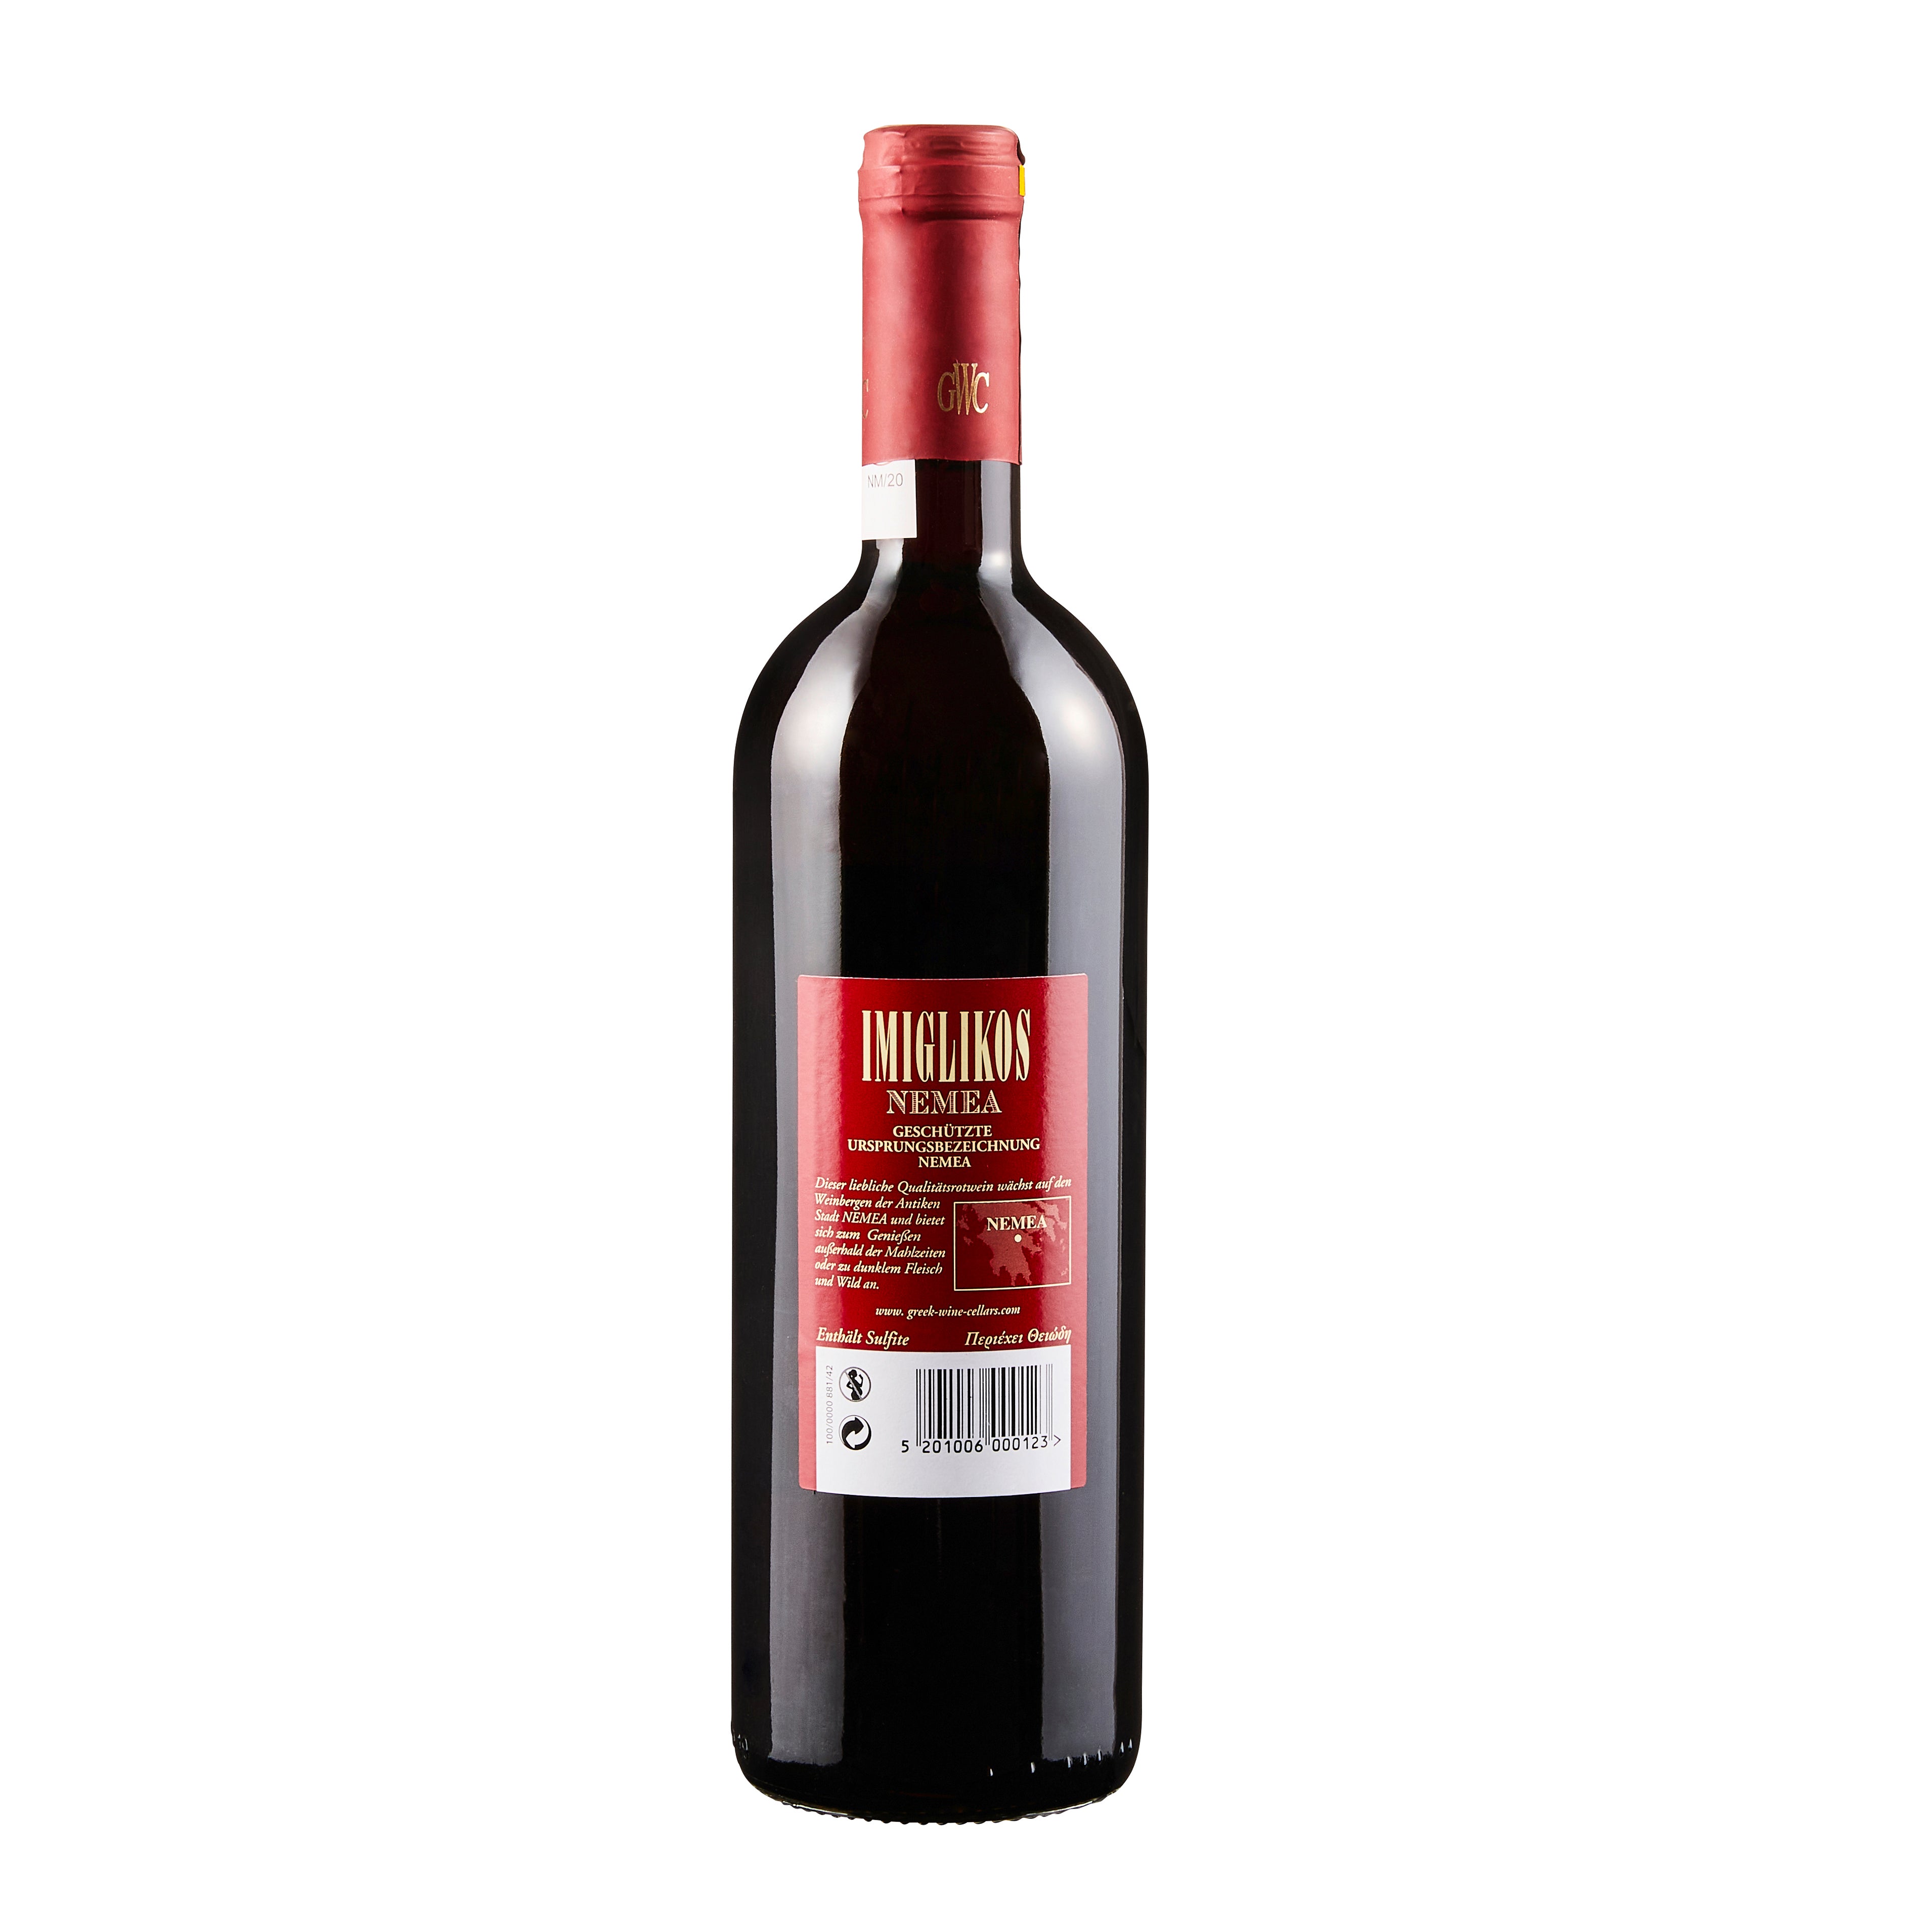 Kourtaki Nemea Imiglikos Rotwein lieblich 0,75 l